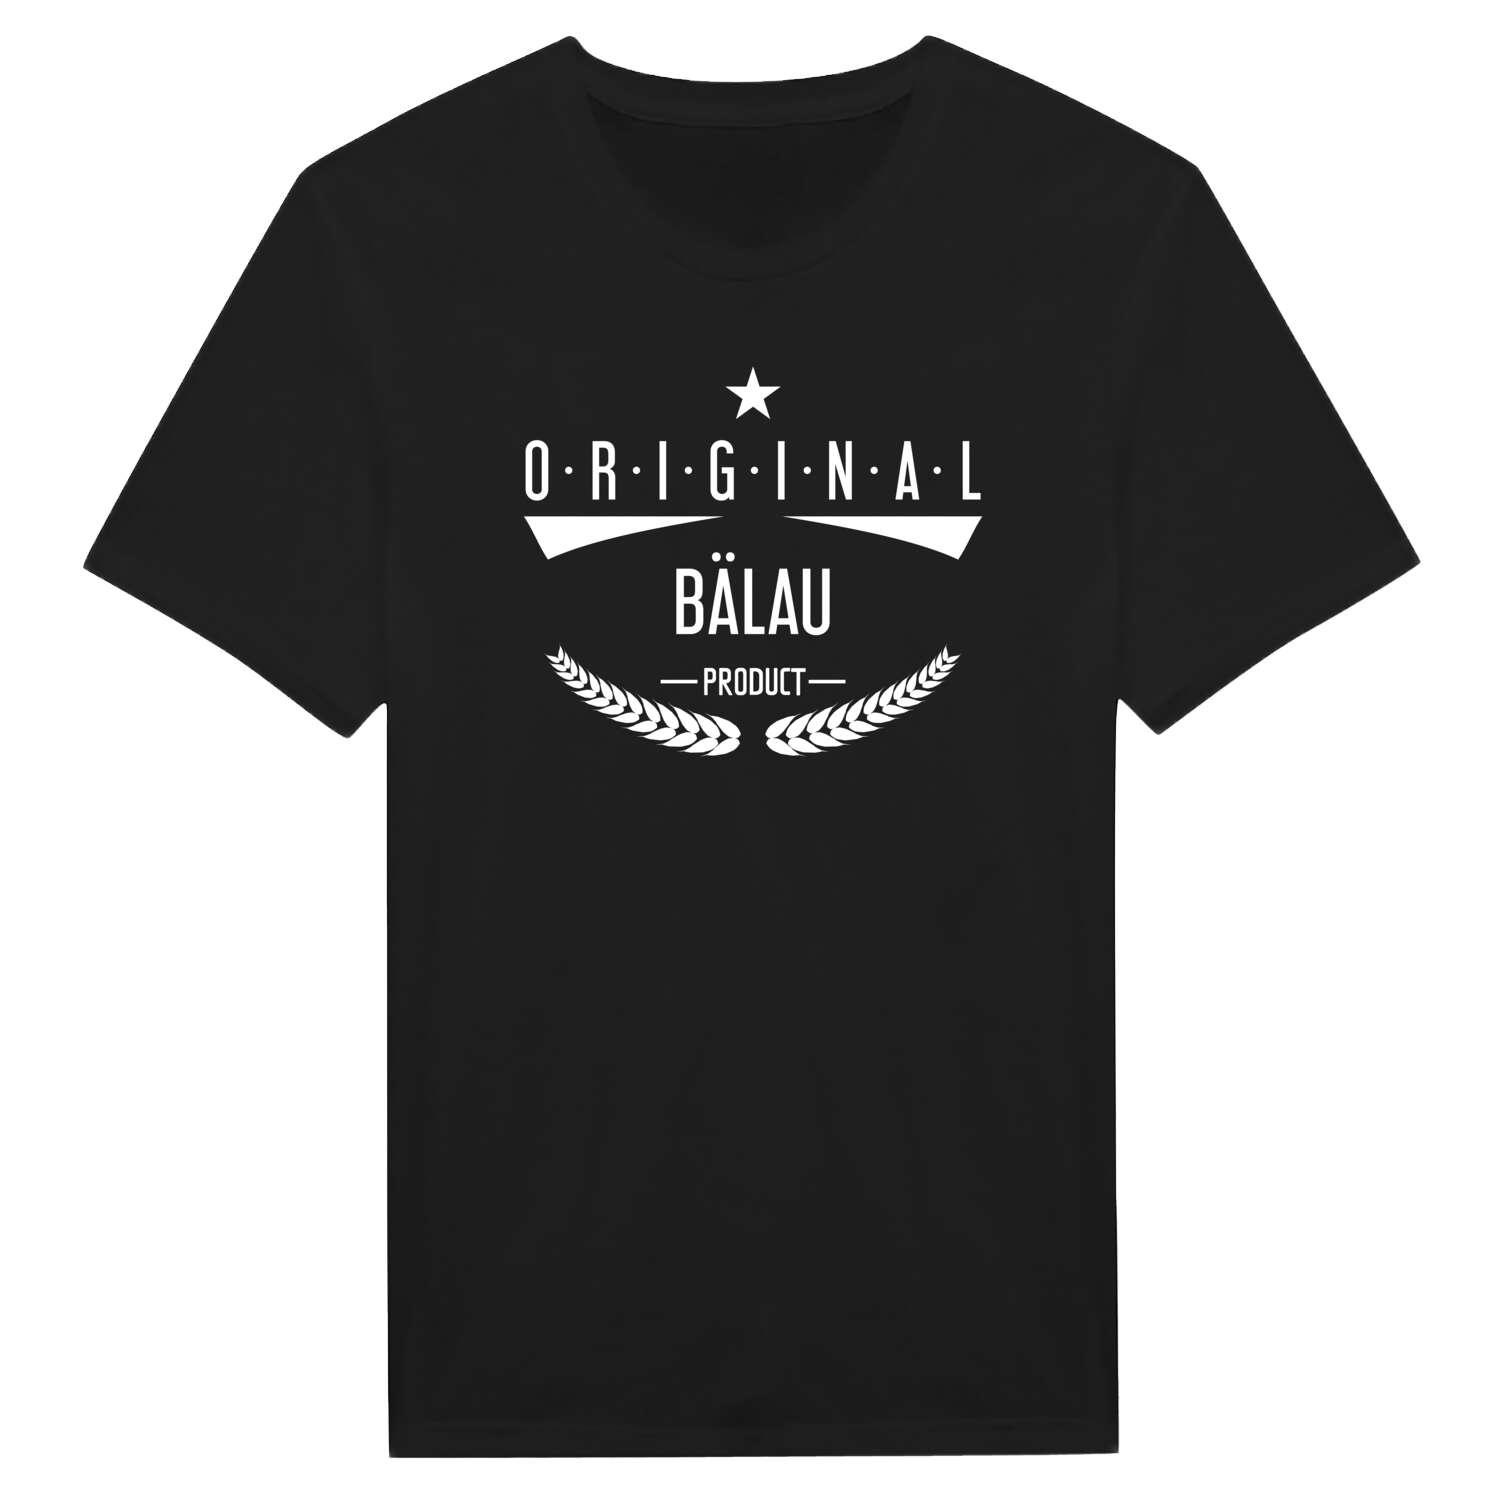 Bälau T-Shirt »Original Product«